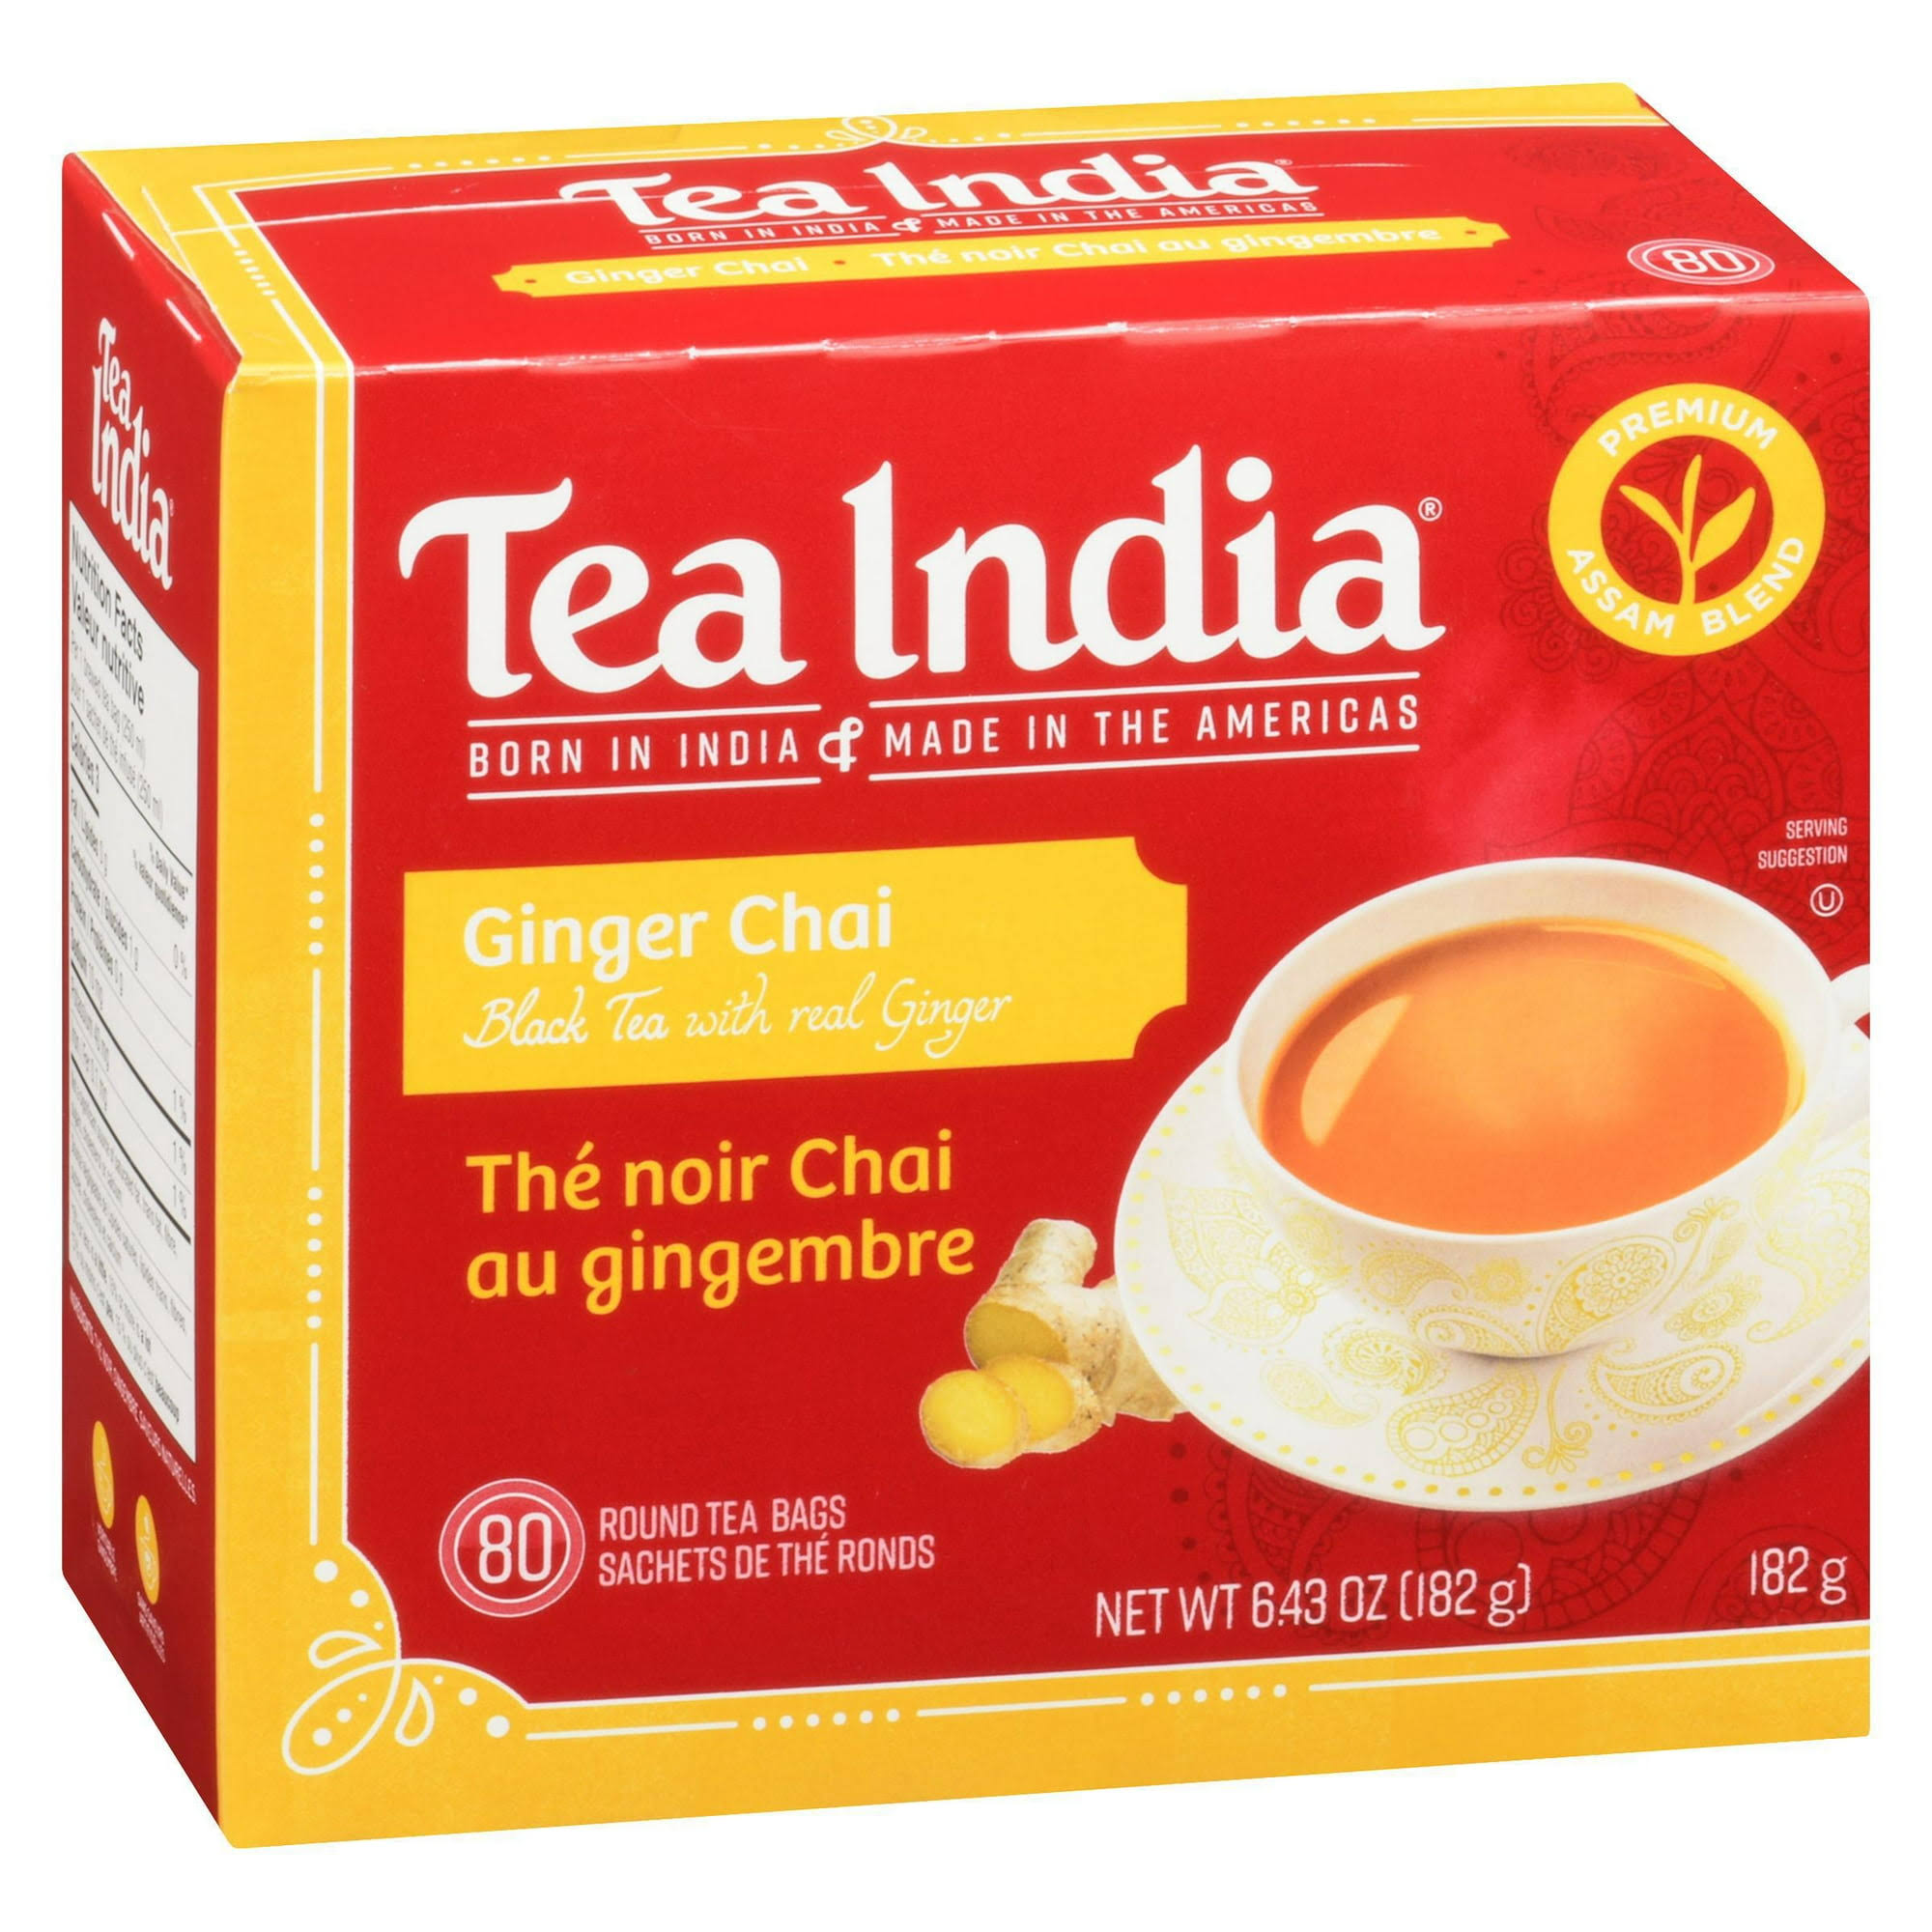 Tea India Ginger Chai